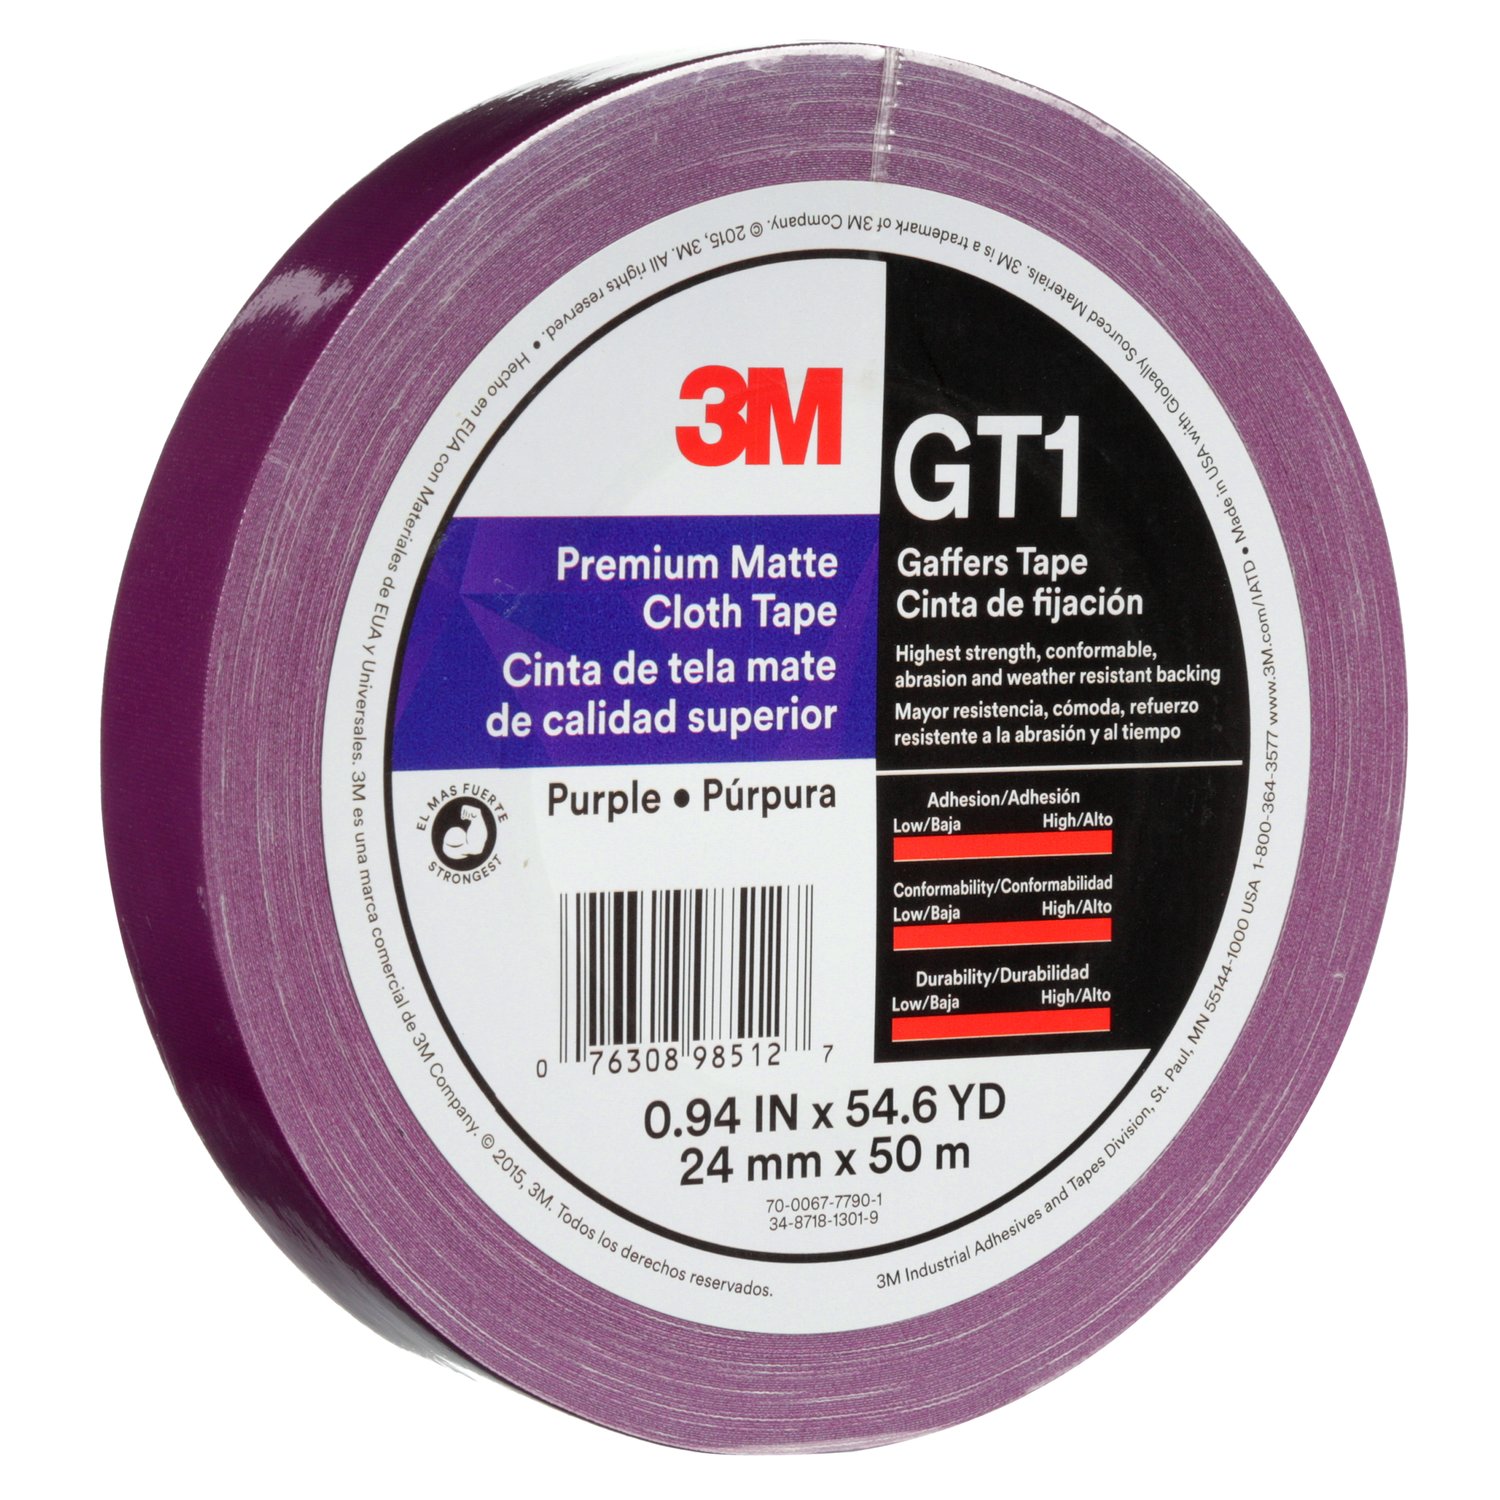 7010300508 - 3M Premium Matte Cloth (Gaffers) Tape GT1, Purple, 24 mm x 50 m, 11
mil, 48/Case